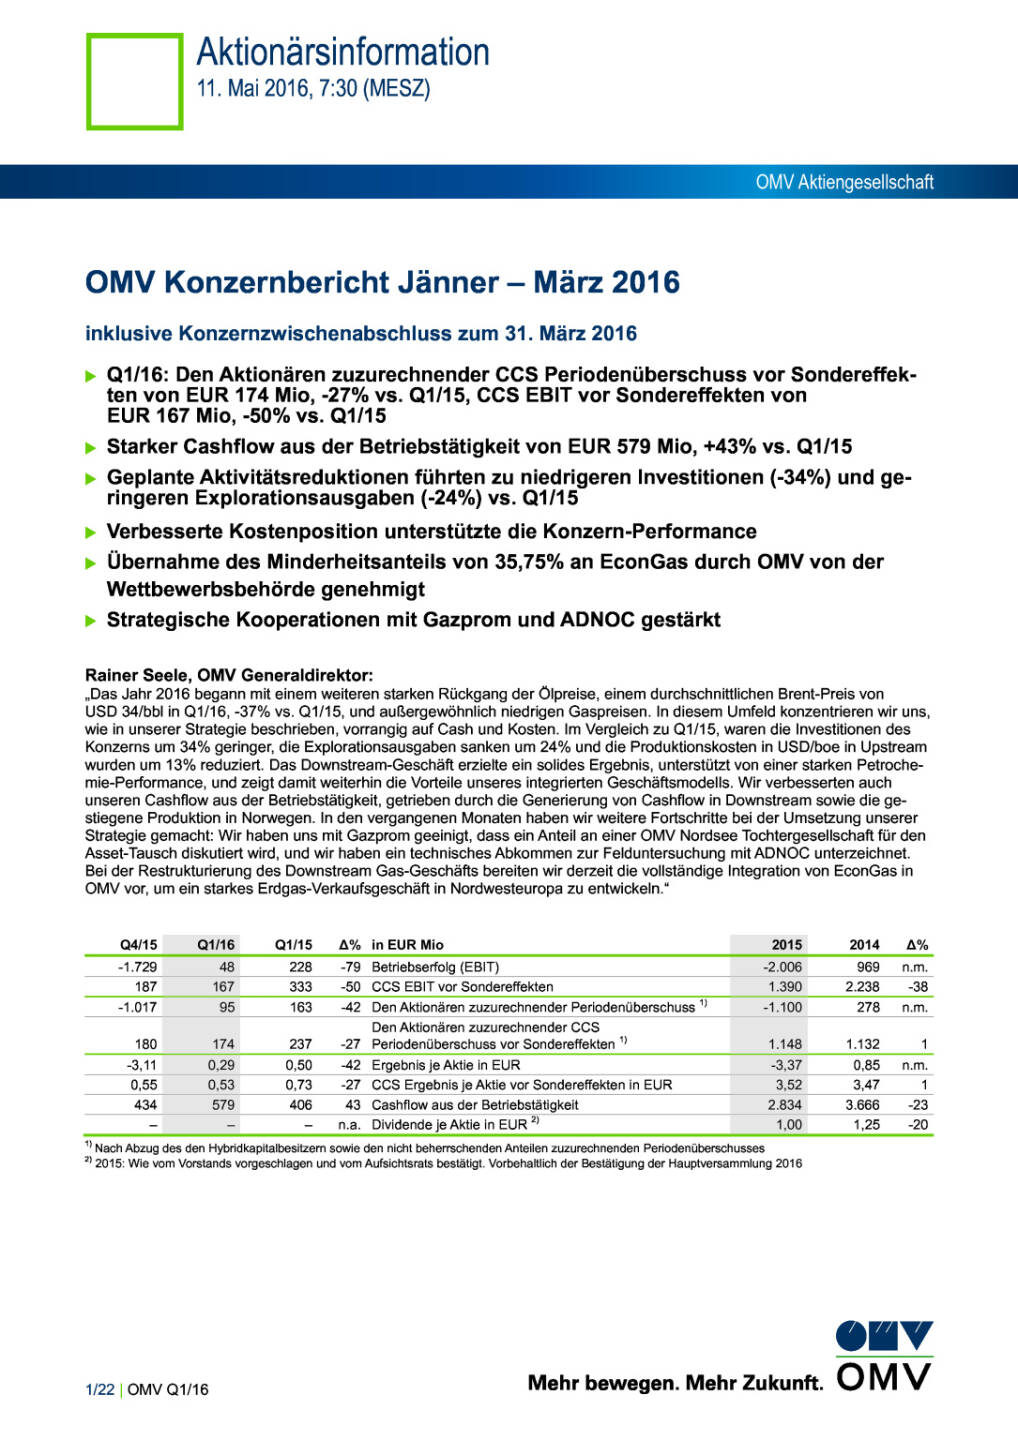 OMV Konzernbericht Jänner – März 2016, Seite 1/22, komplettes Dokument unter http://boerse-social.com/static/uploads/file_1031_omv_konzernbericht_janner_marz_2016.pdf